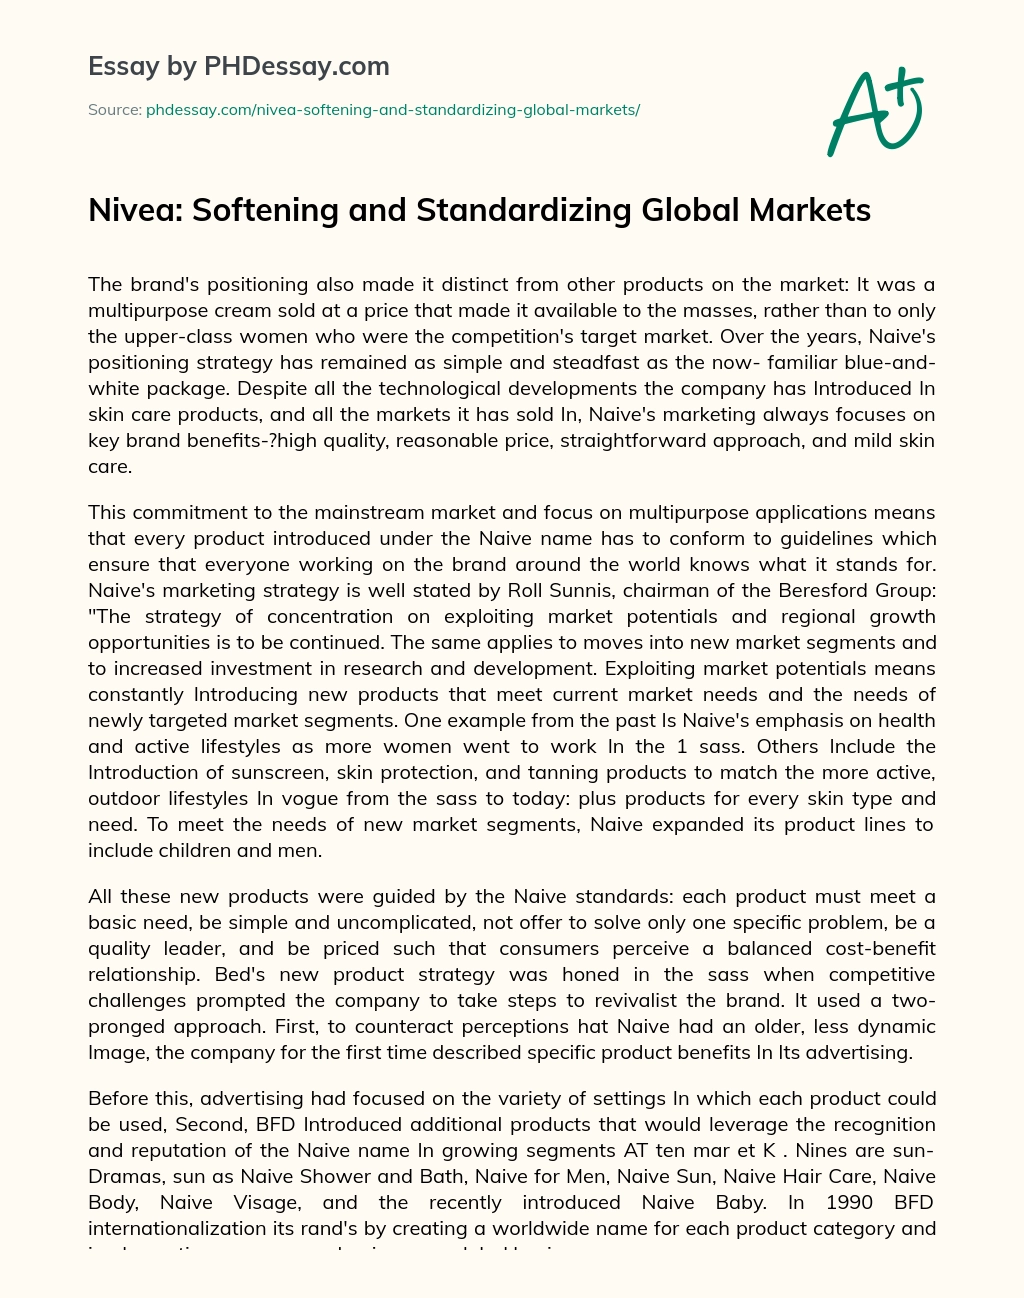 Nivea: Softening and Standardizing Global Markets essay